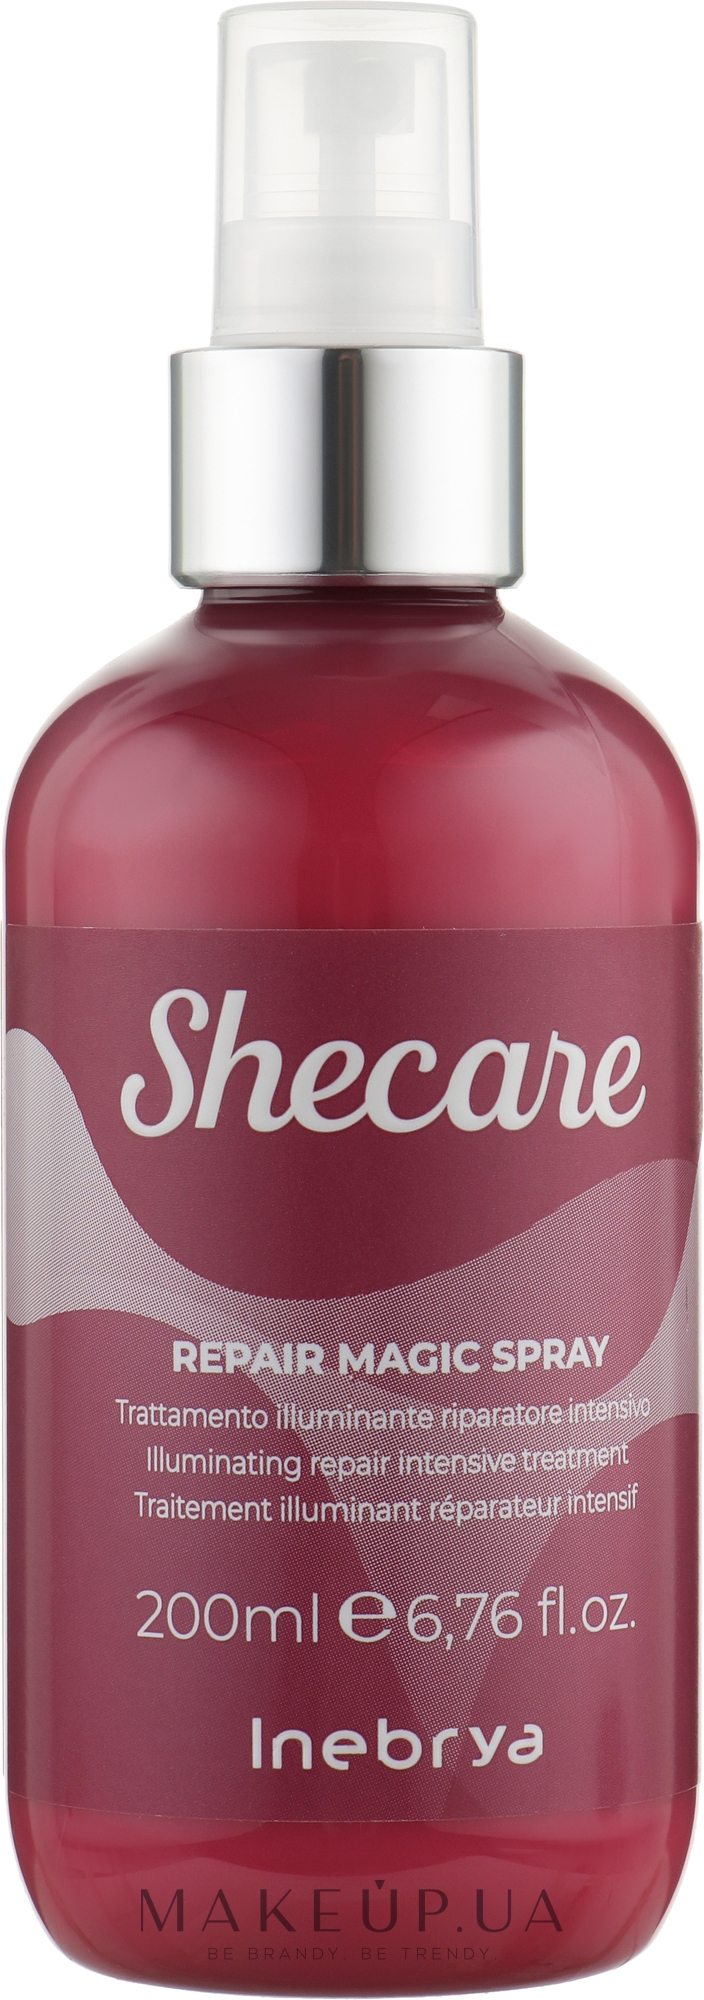 Восстанавливающий магический спрей - Inebrya She Care Repair Magic Spray  — фото 200ml